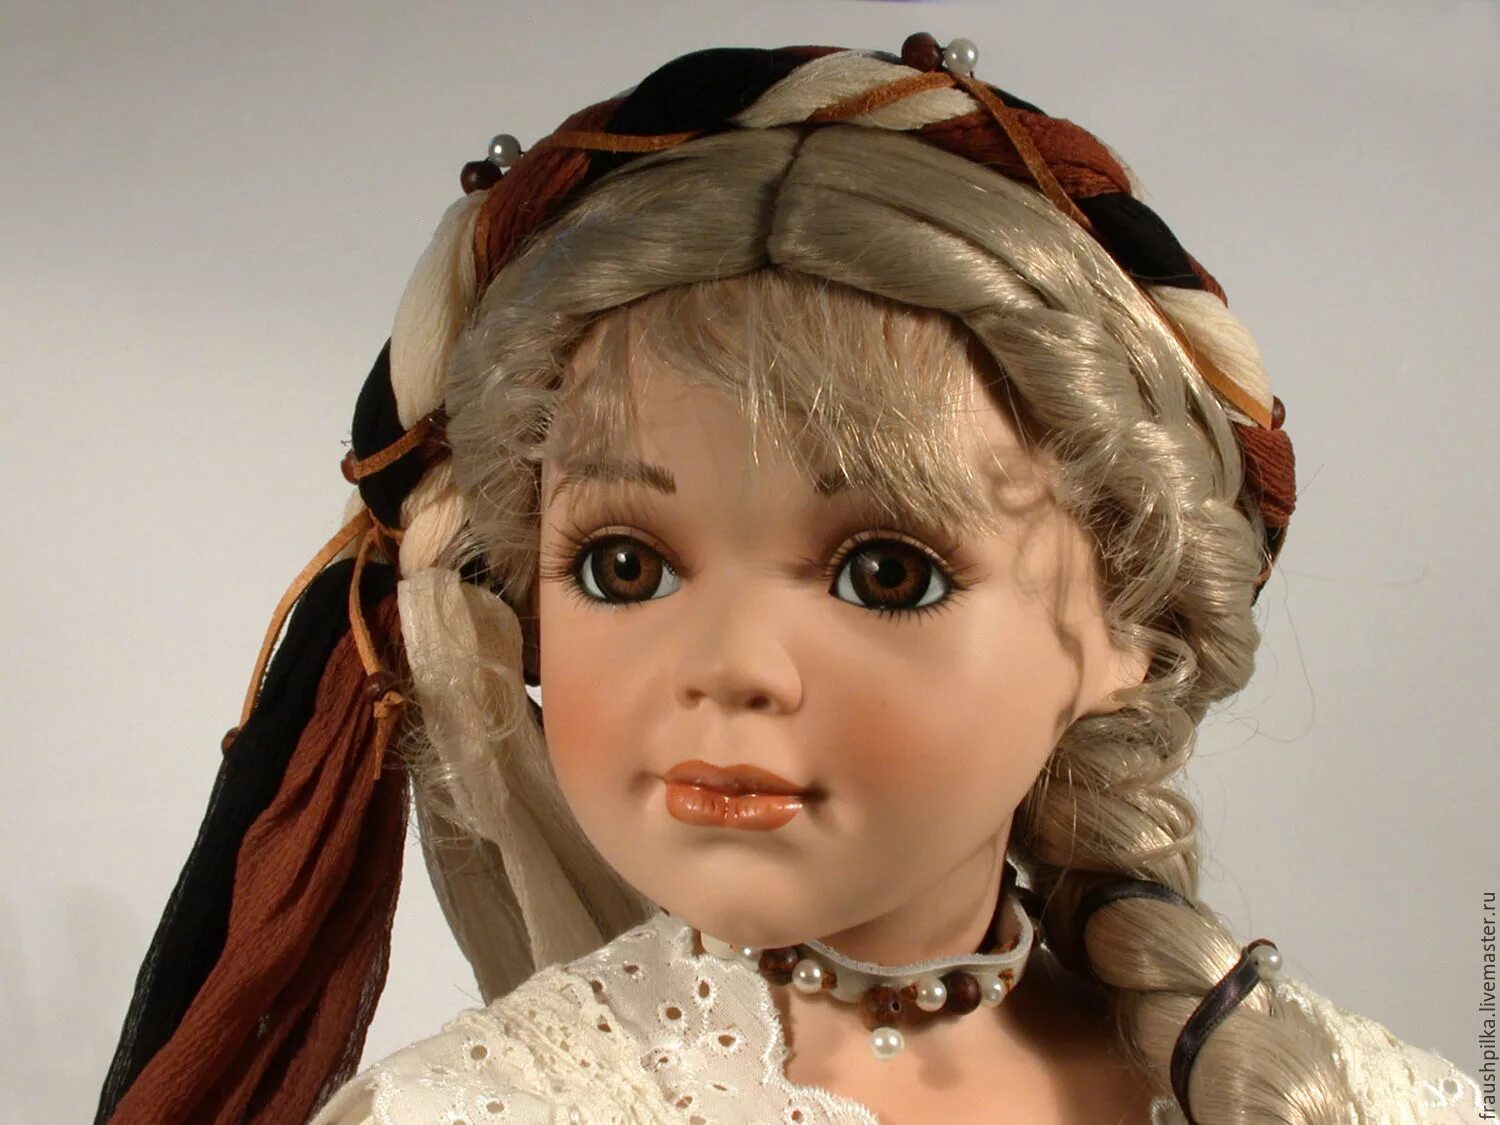 Кукла фарфоровая. Немецкие фарфоровые куклы. Красивые фарфоровые куклы. Фарфоровые куклы коллекционные.